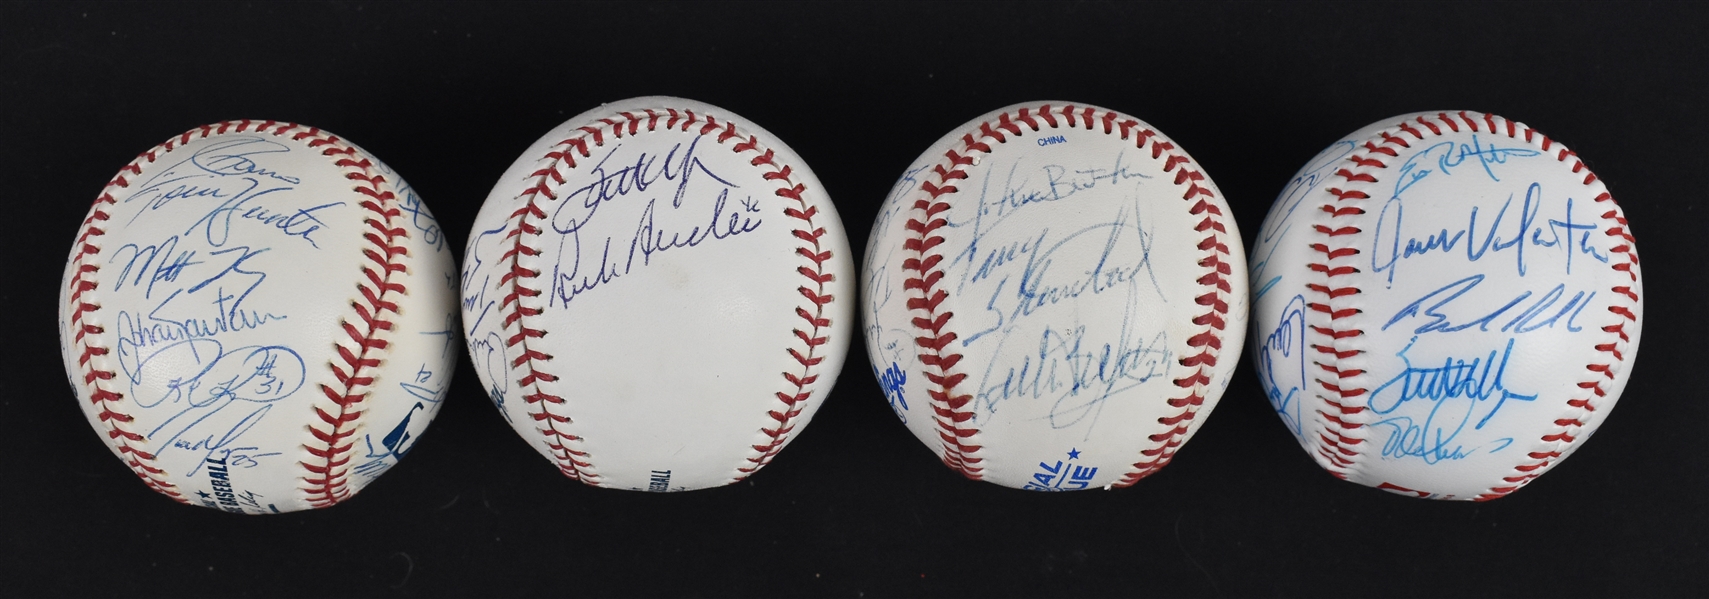 Minnesota Twins Autographed Baseballs